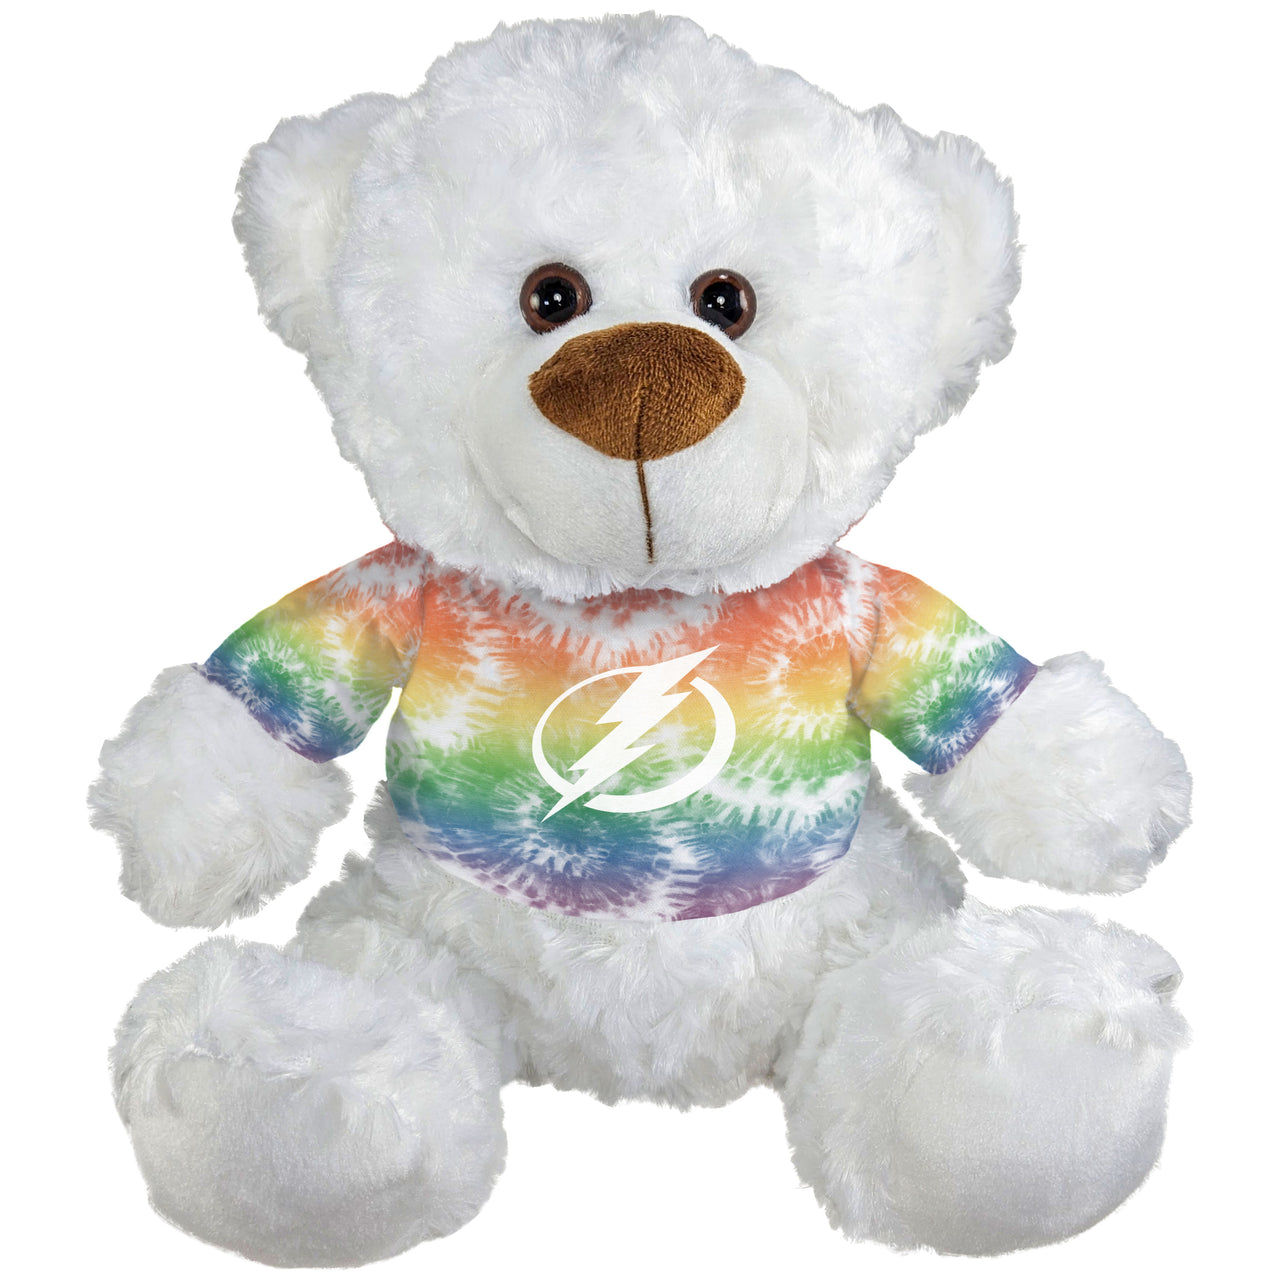 Tampa Bay Lightning 9.5" White Bear With Rainbow Tie Dye Tee Plush